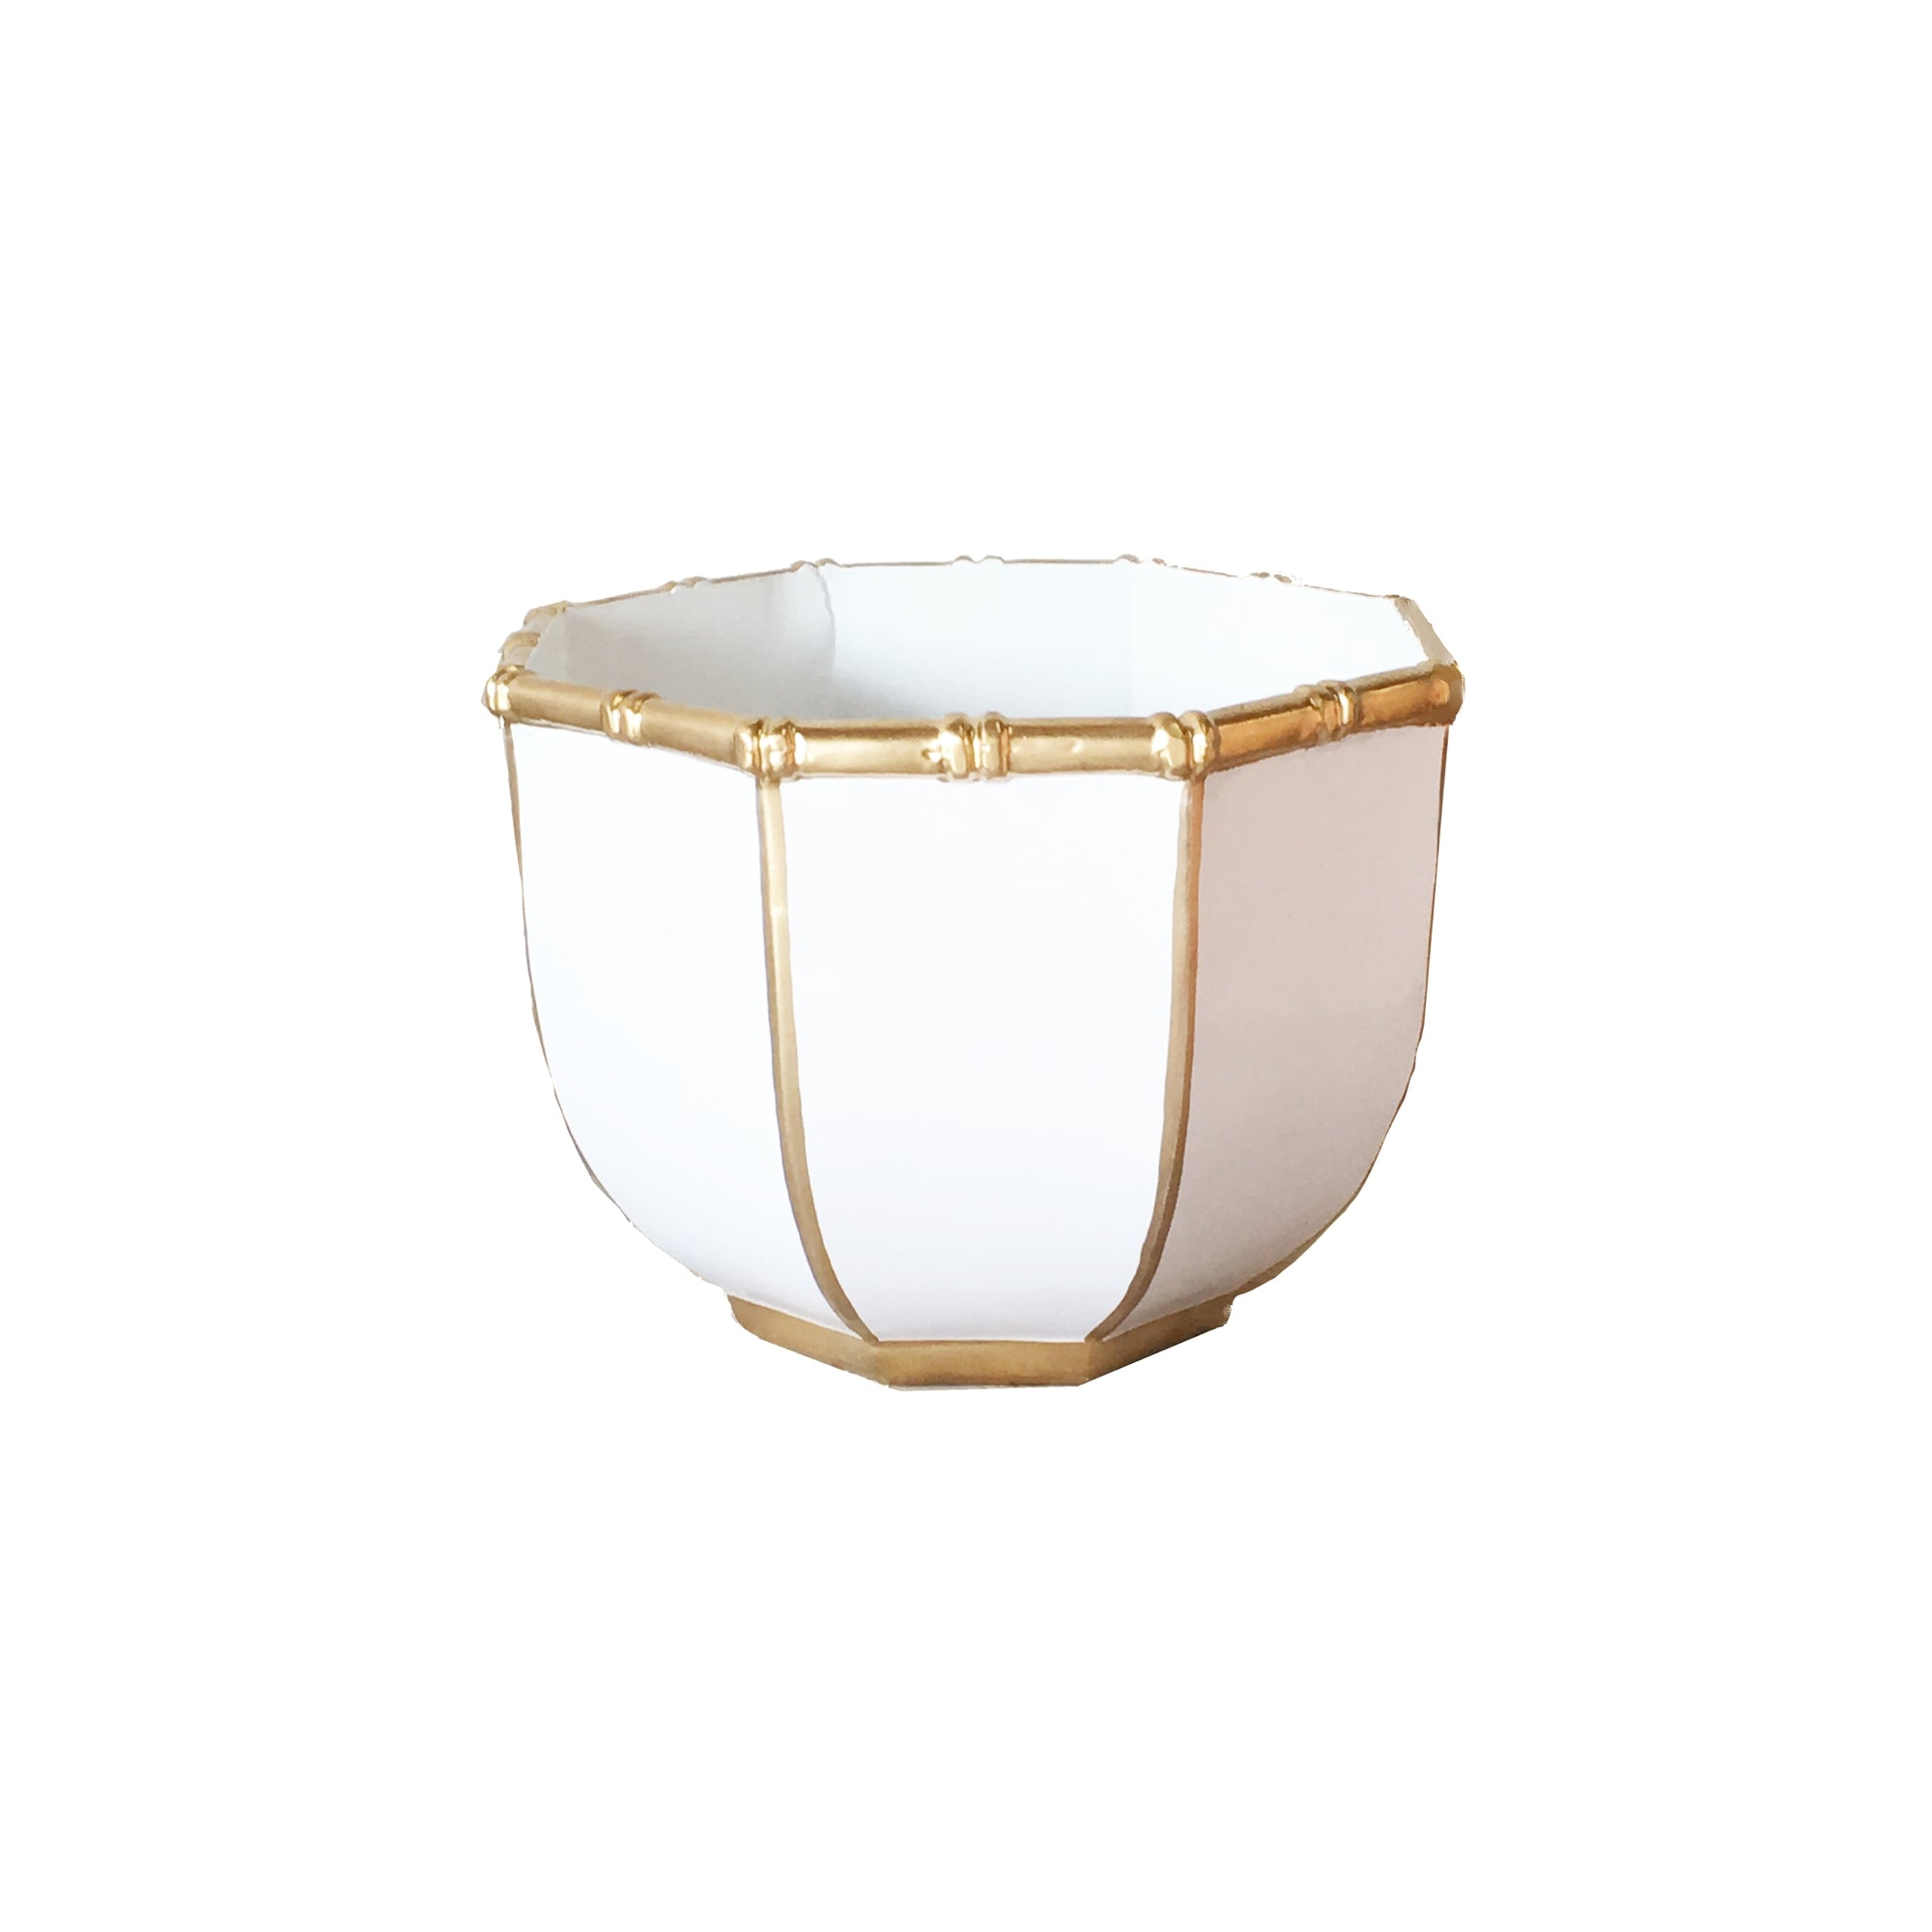 Dana Gibson Bamboo Bowl in White, Small